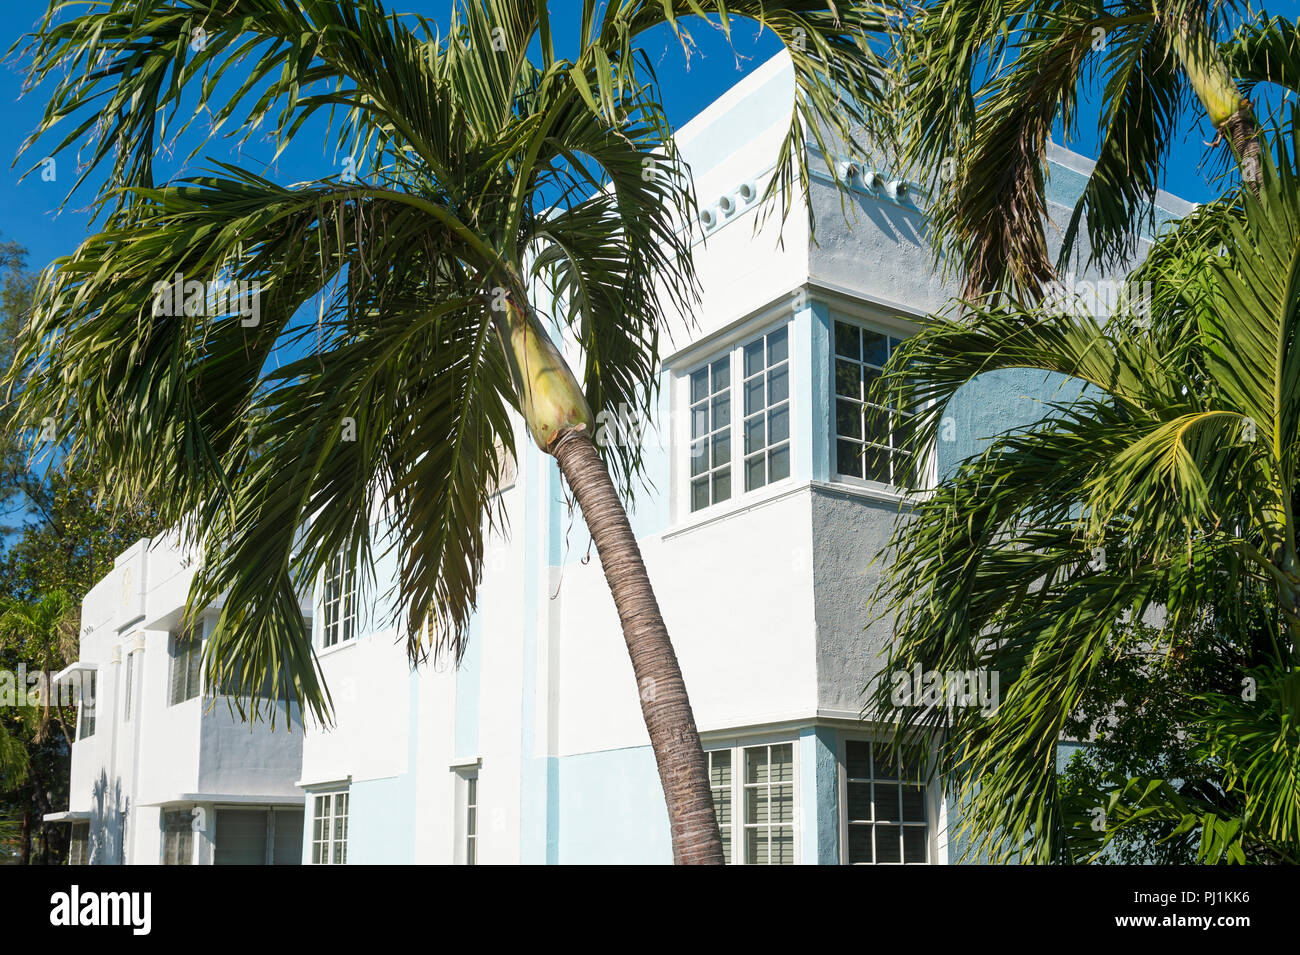 Typische pastell-colorfed 1930s Art Deco Architektur mit Palmen in Miami, Florida Stockfoto